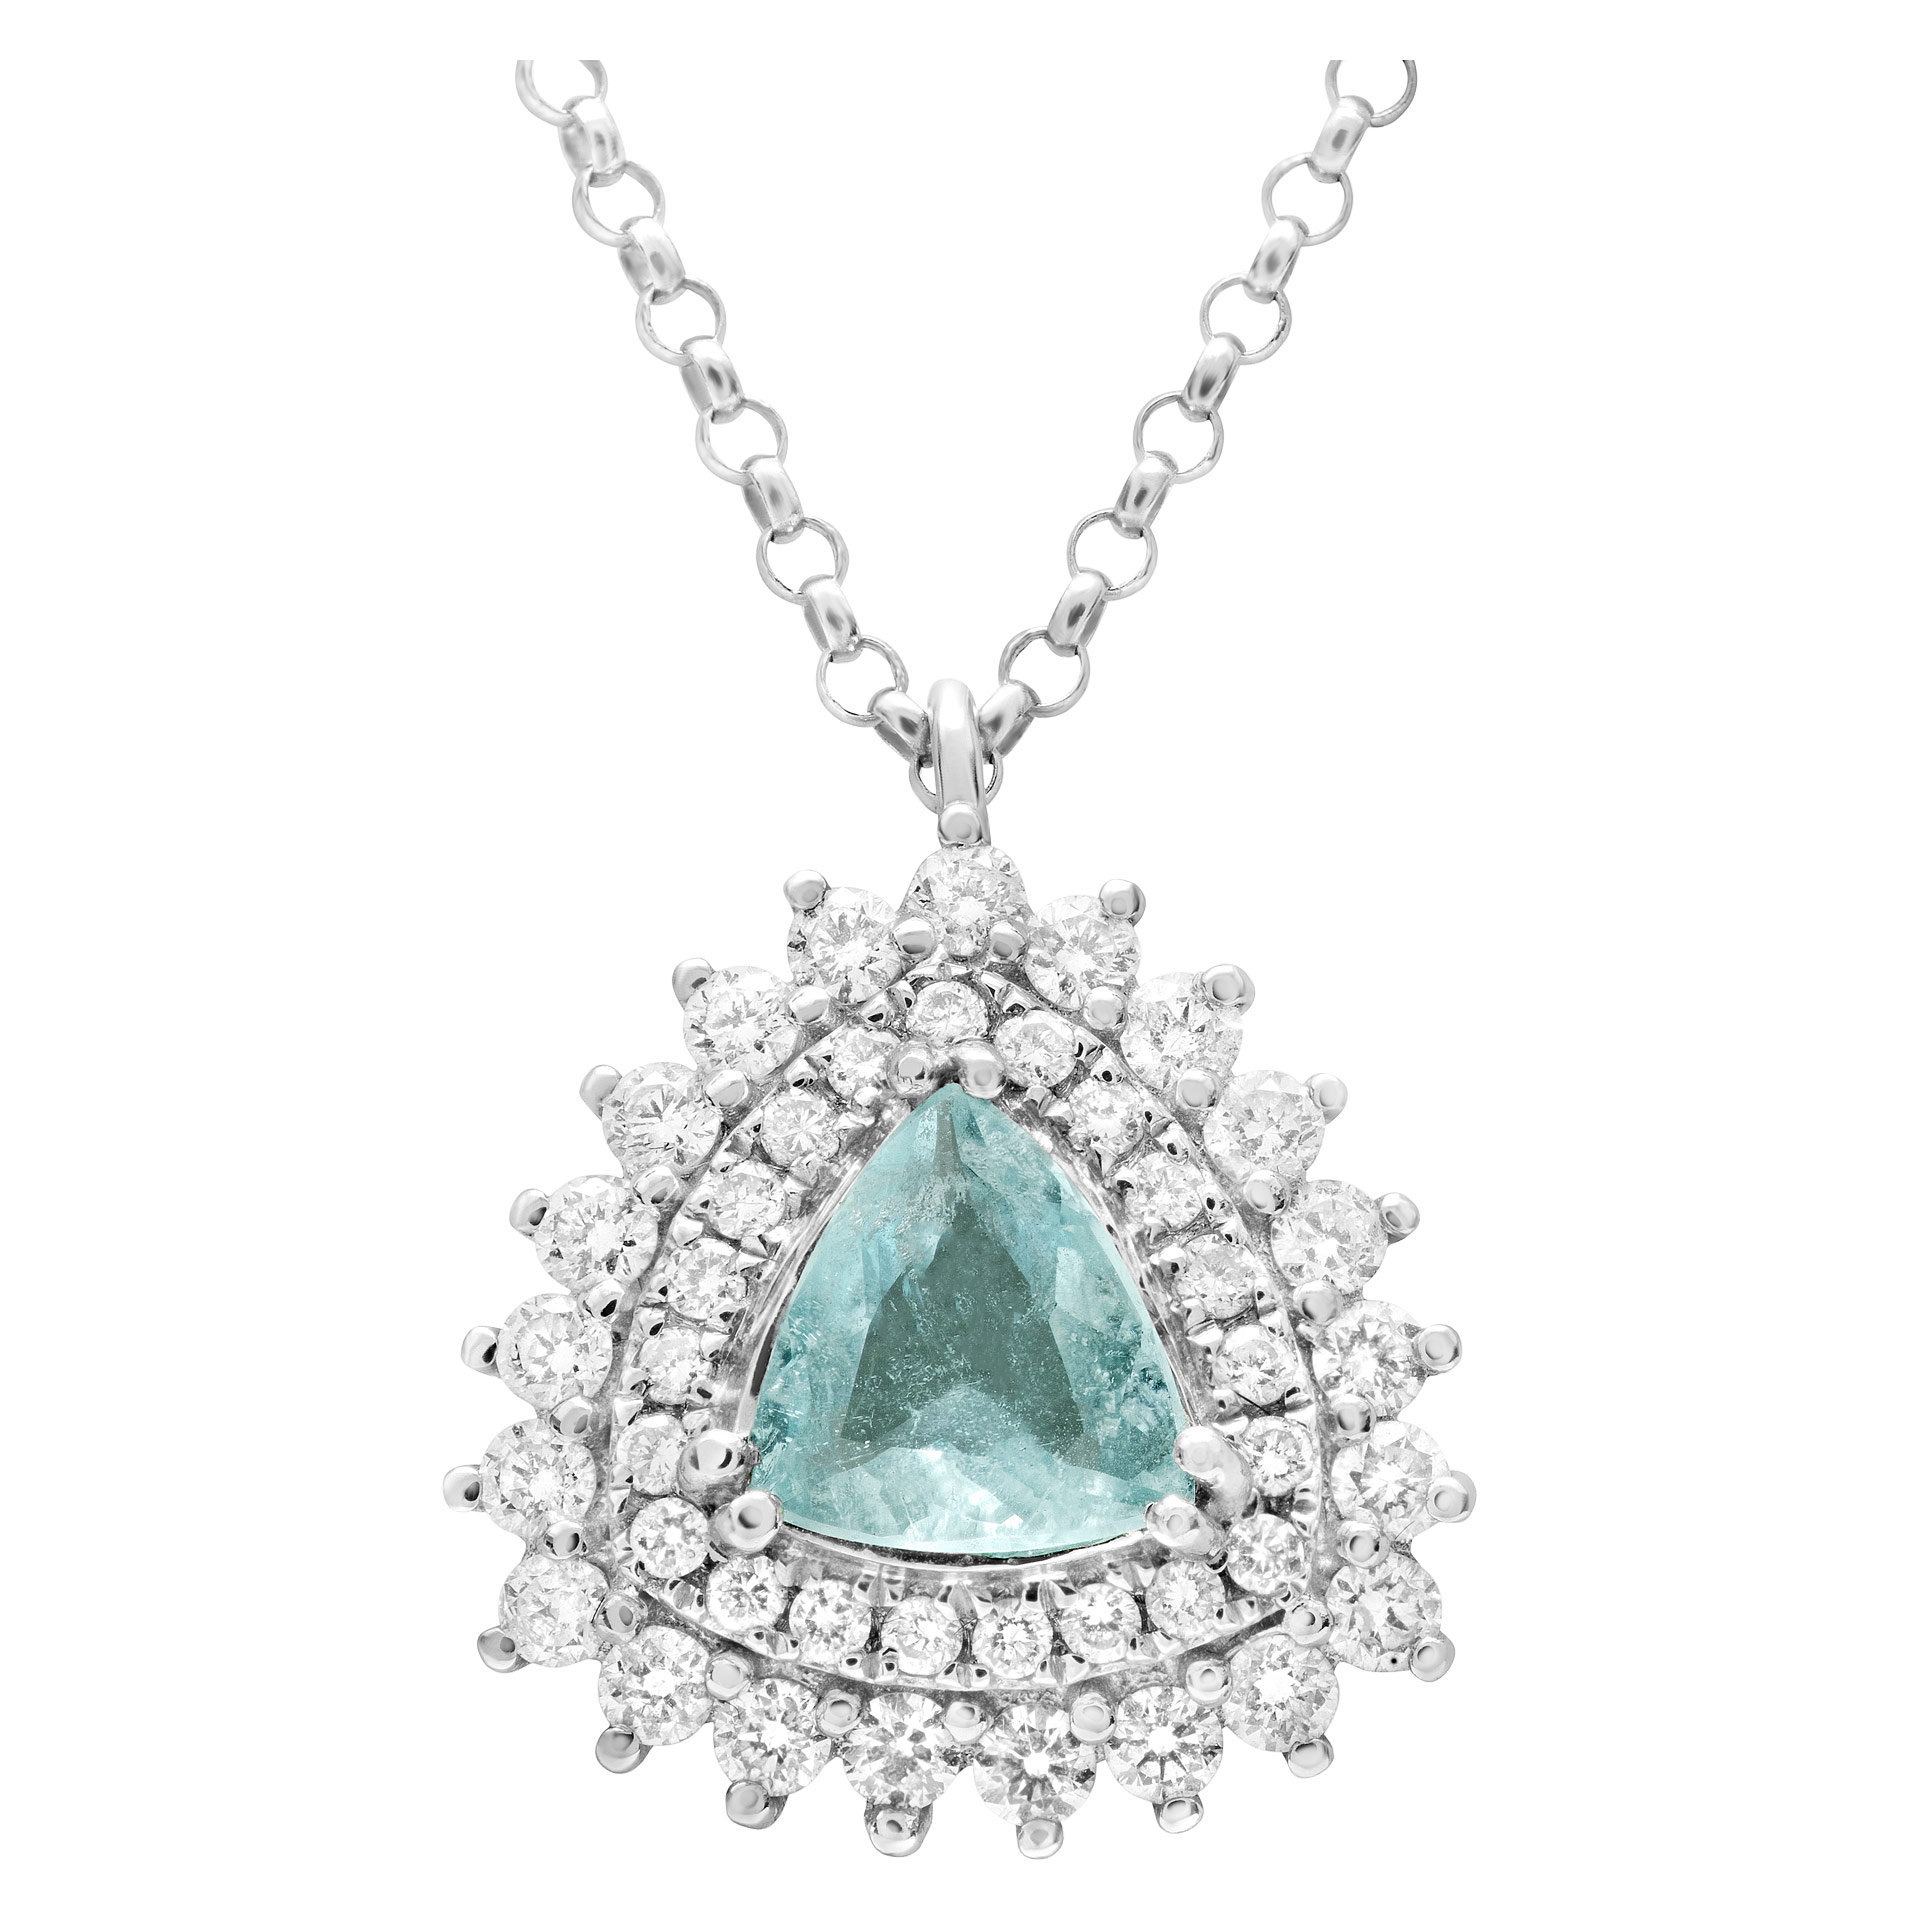 Sparkling tourmaline pendant necklace with diamonds